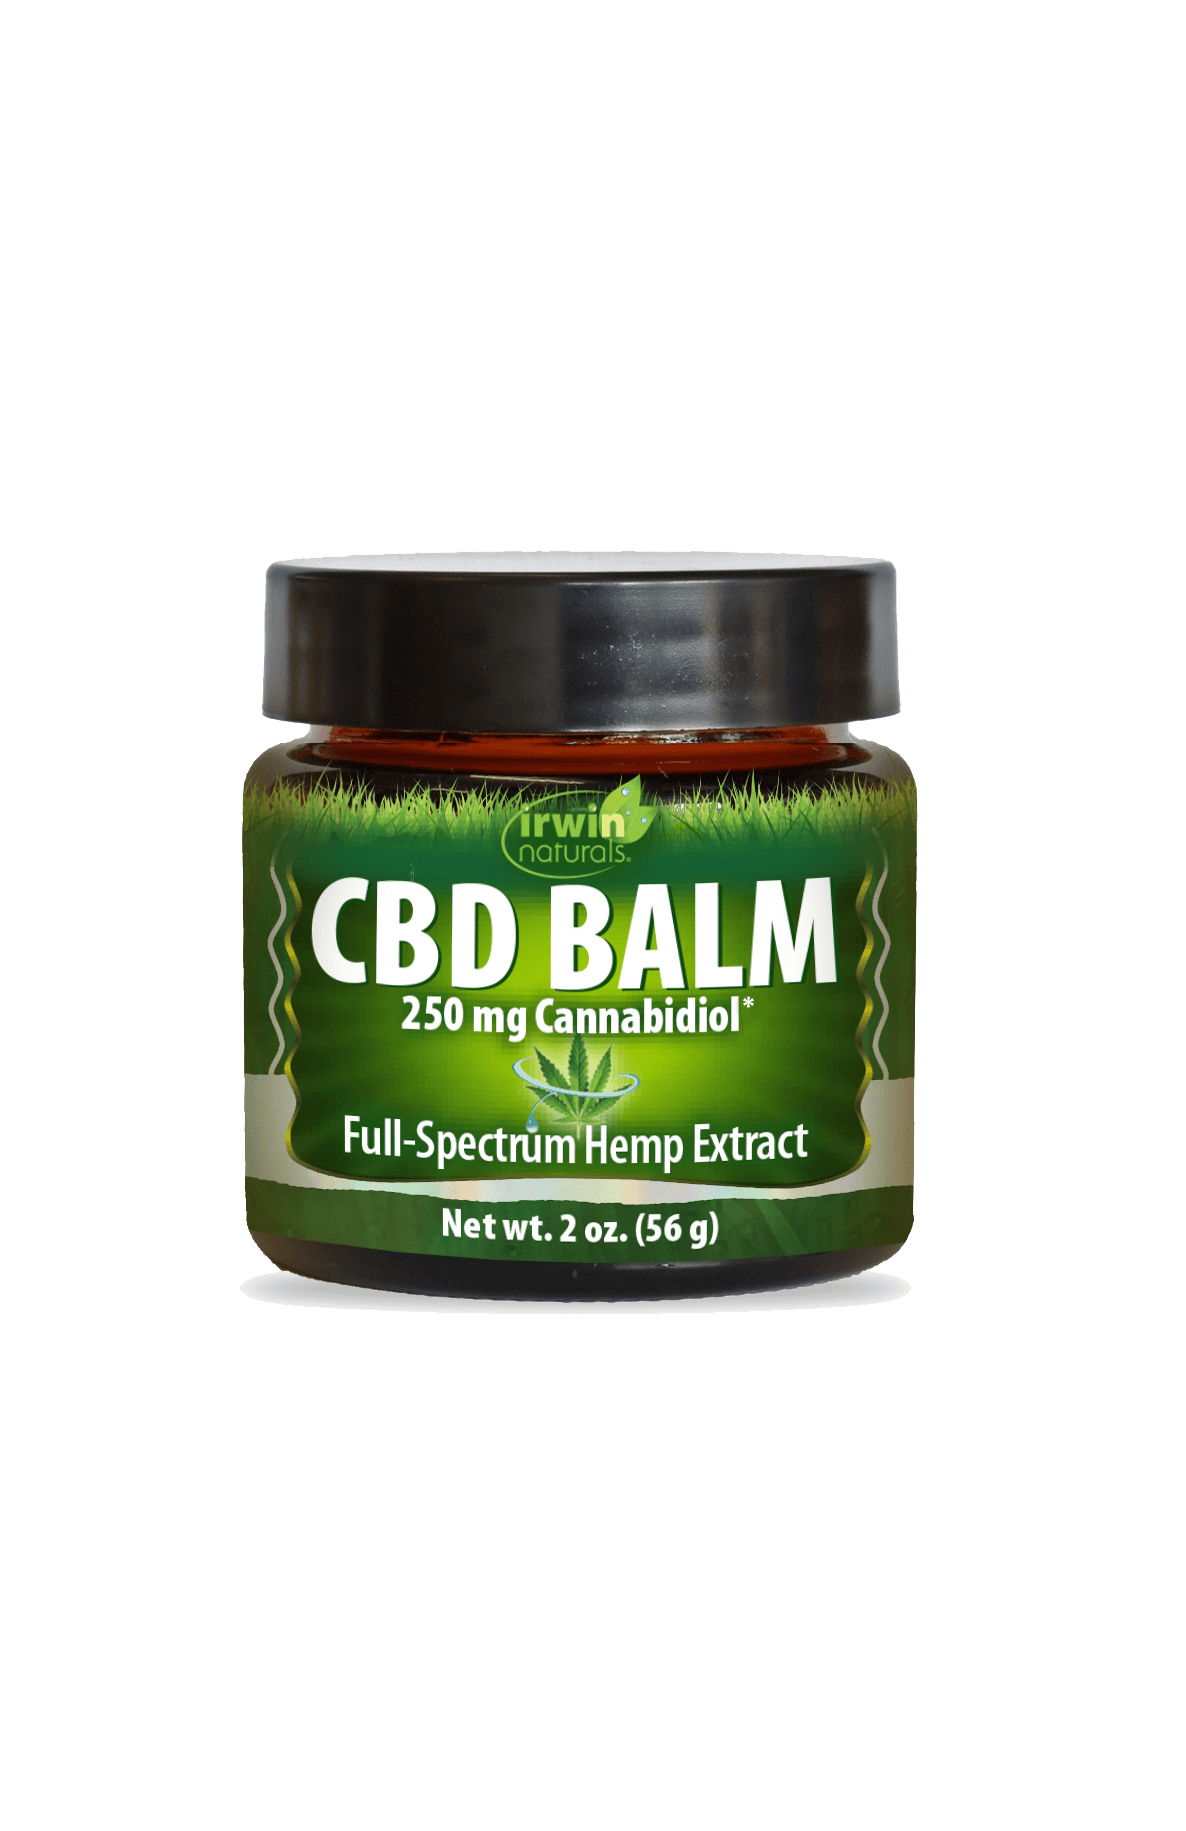 CBD Balm 250 mg Cannabidiol by Irwin Naturals